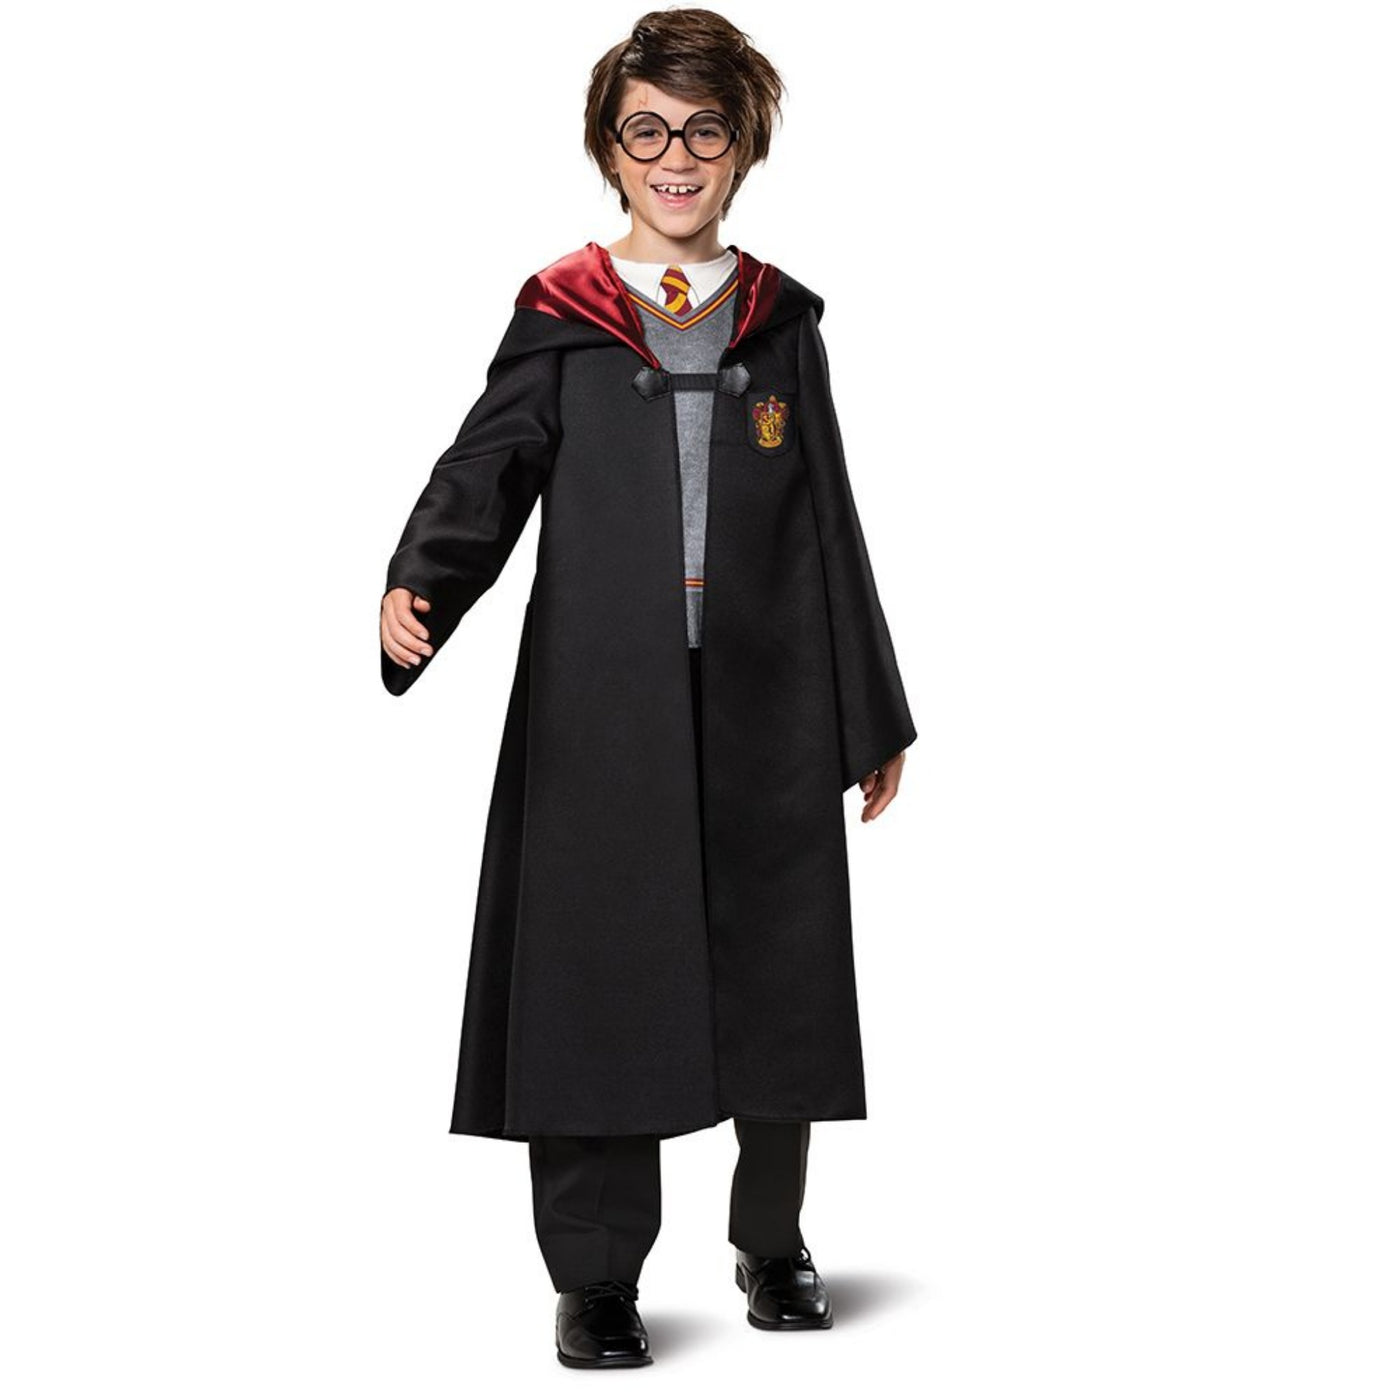 Harry Potter Classic Boys Costume